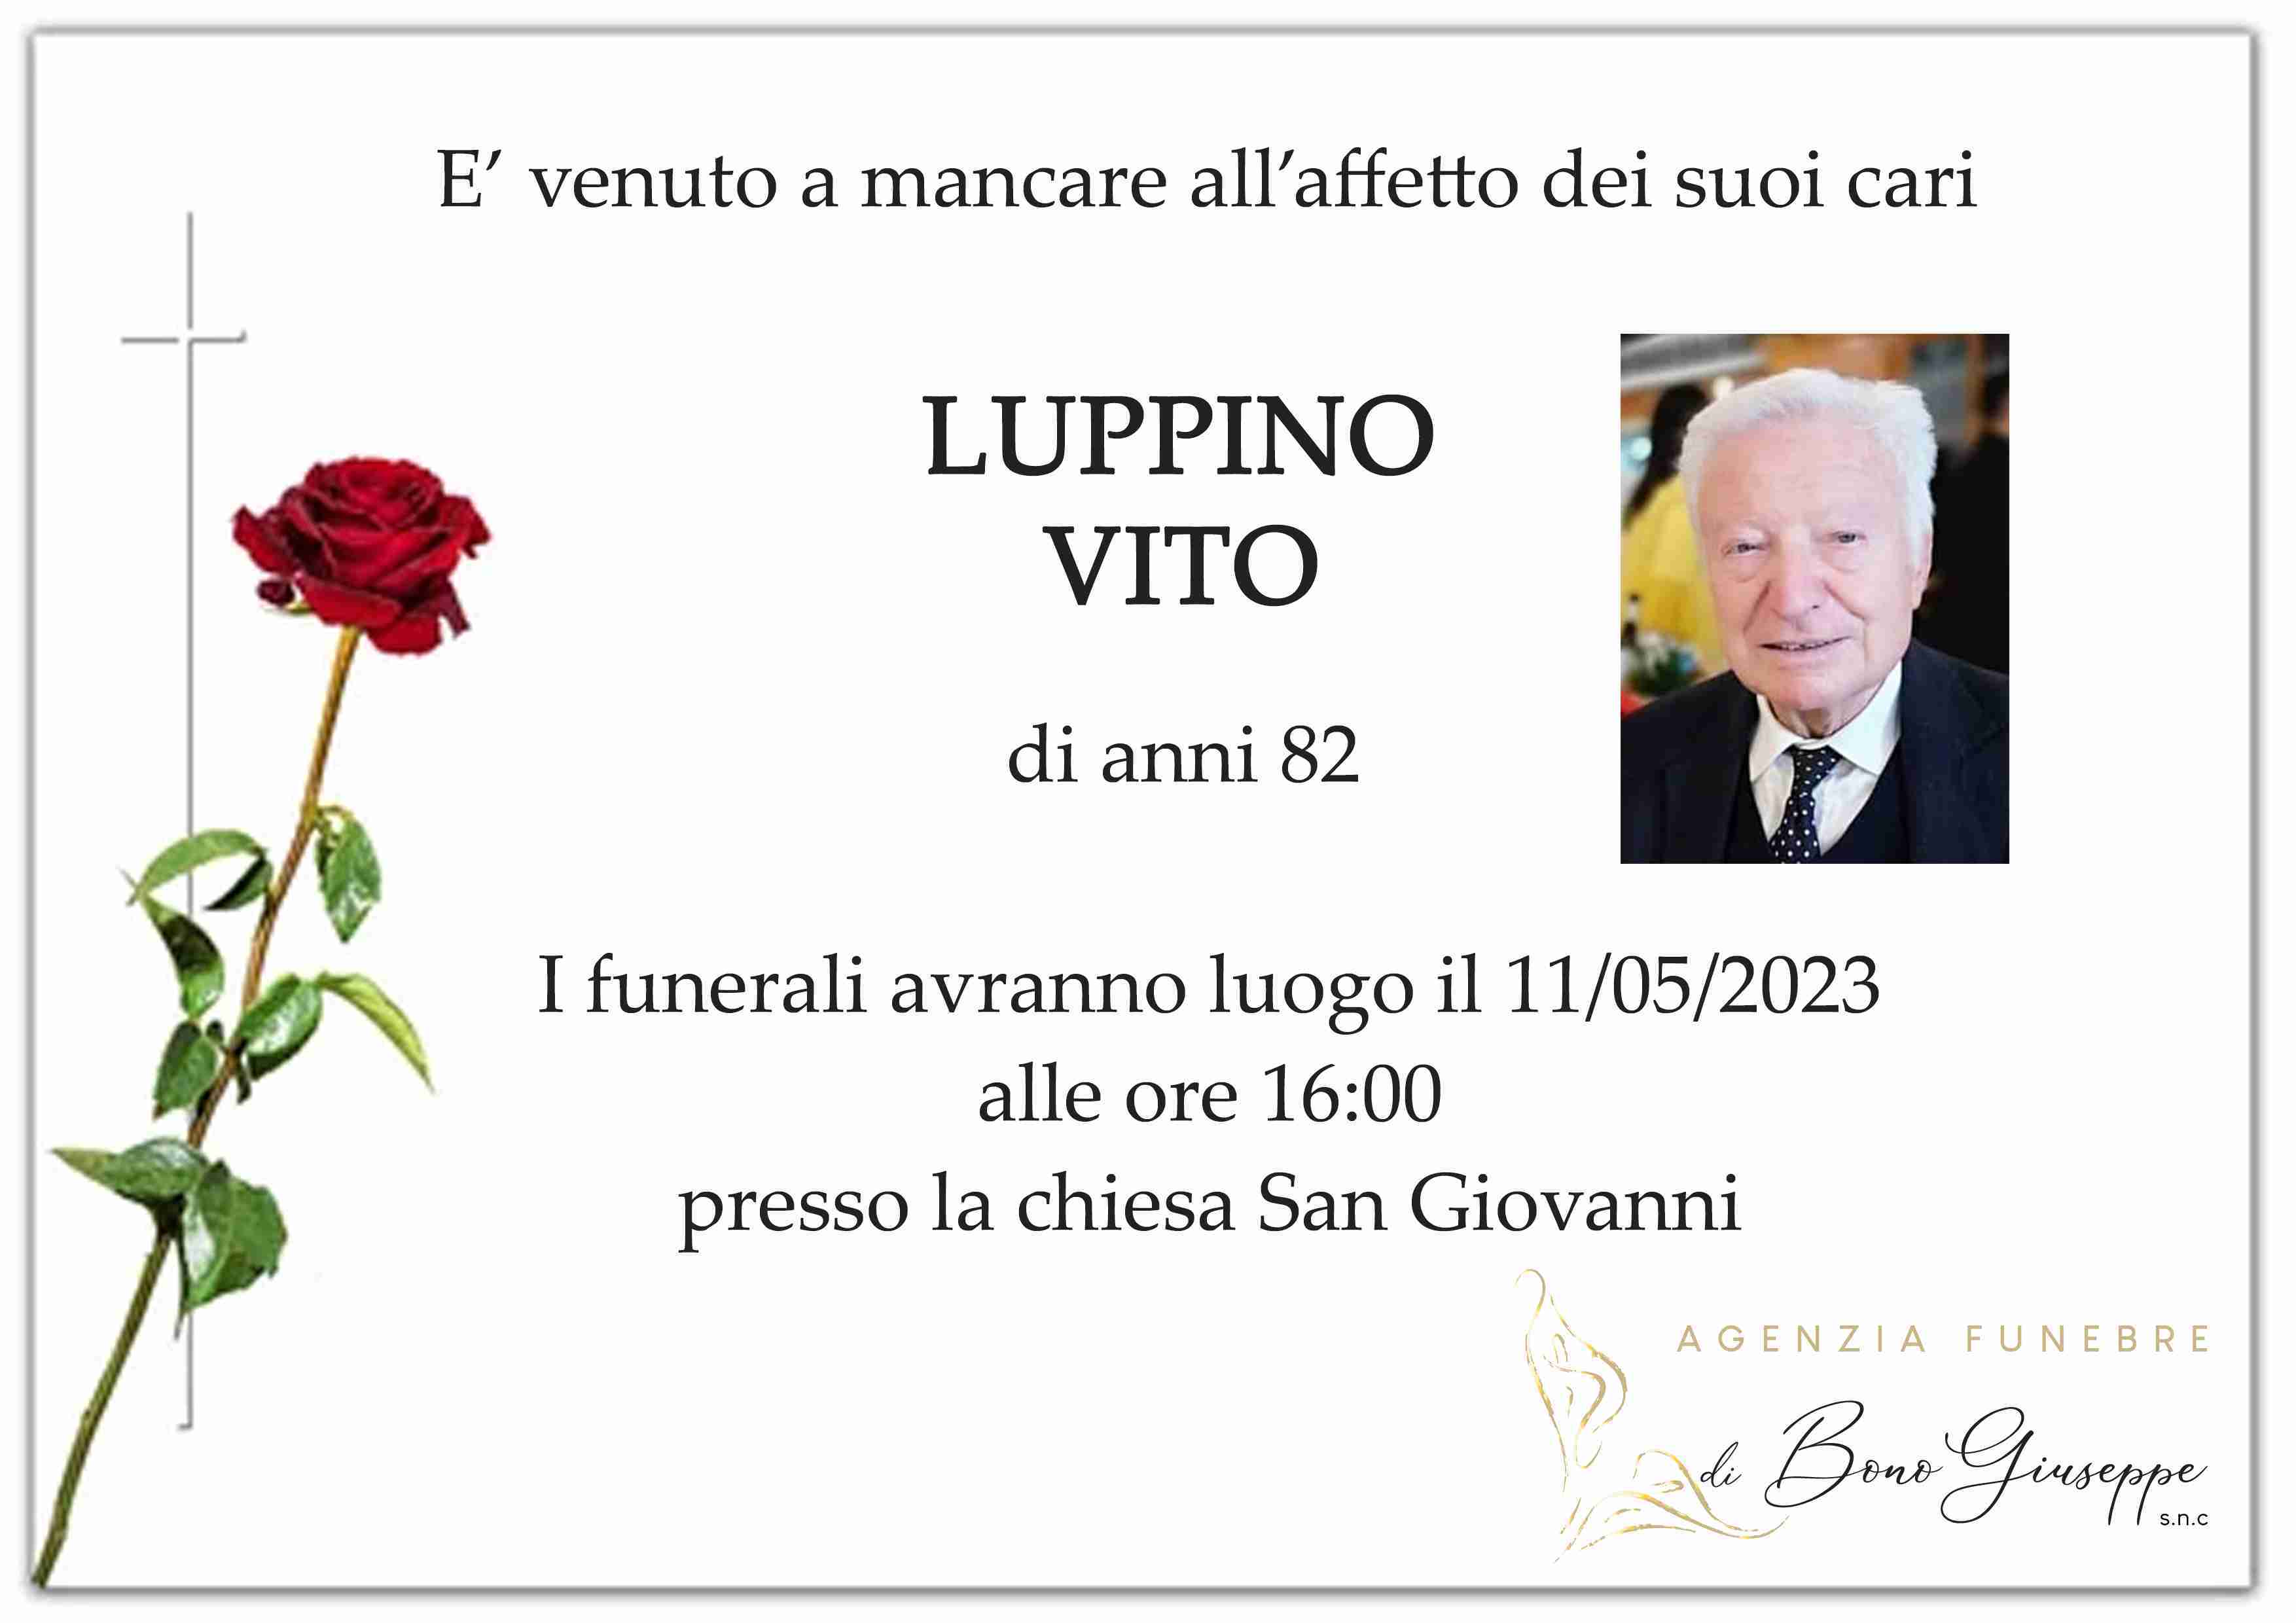 Vito Luppino